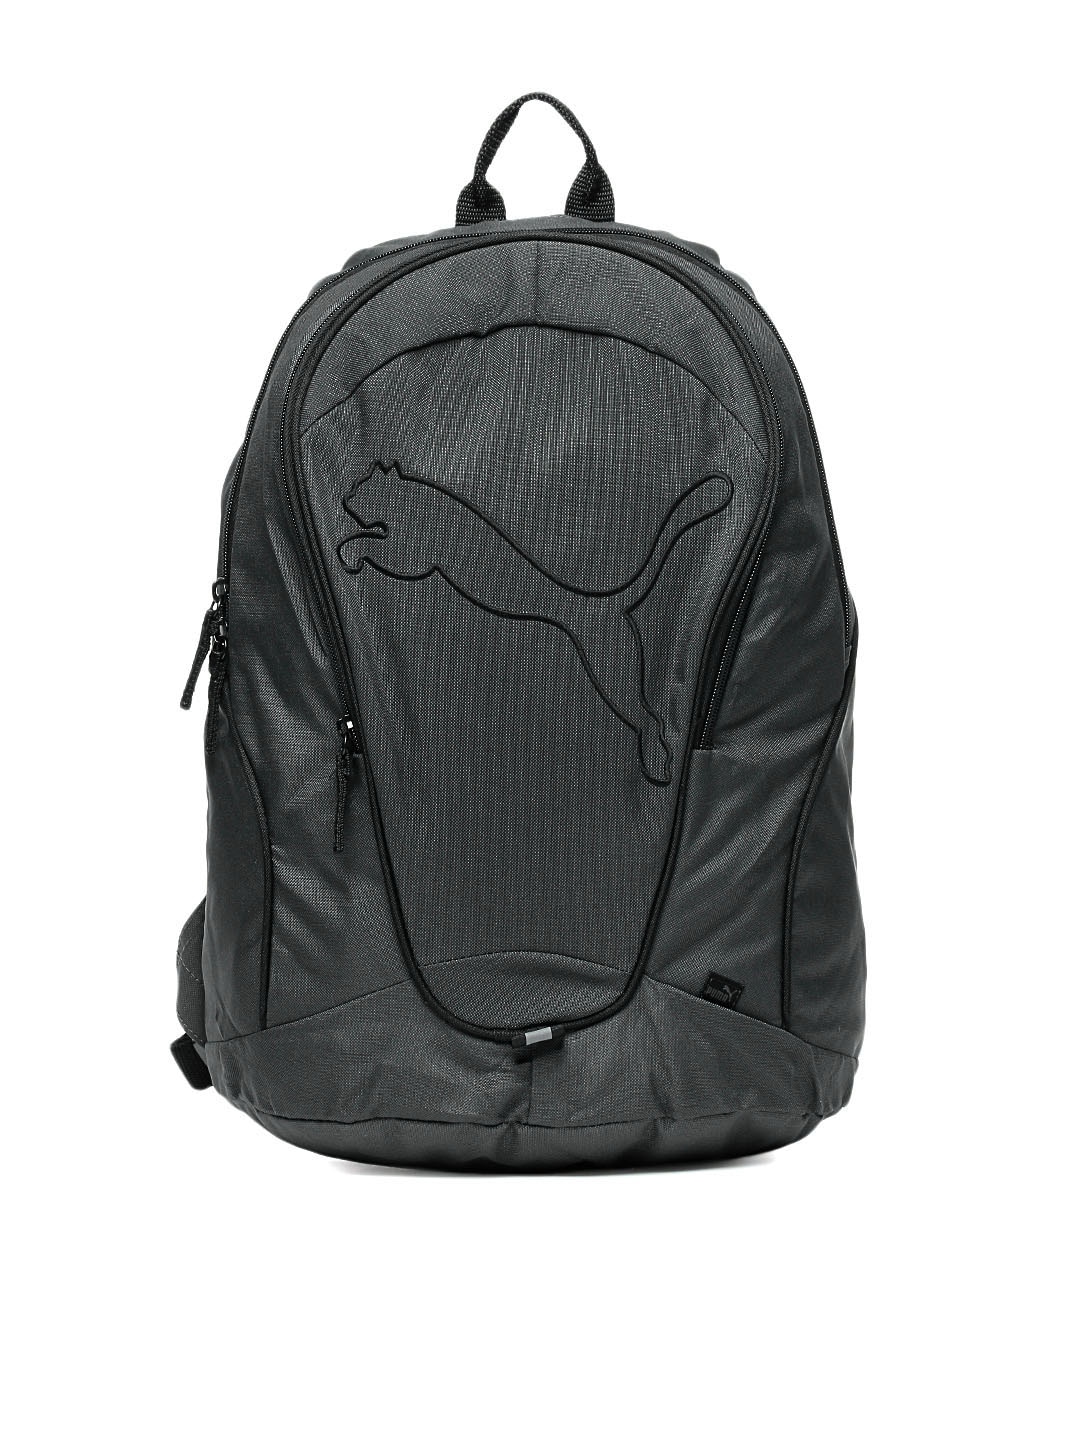 Puma Unisex Charcoal Backpack